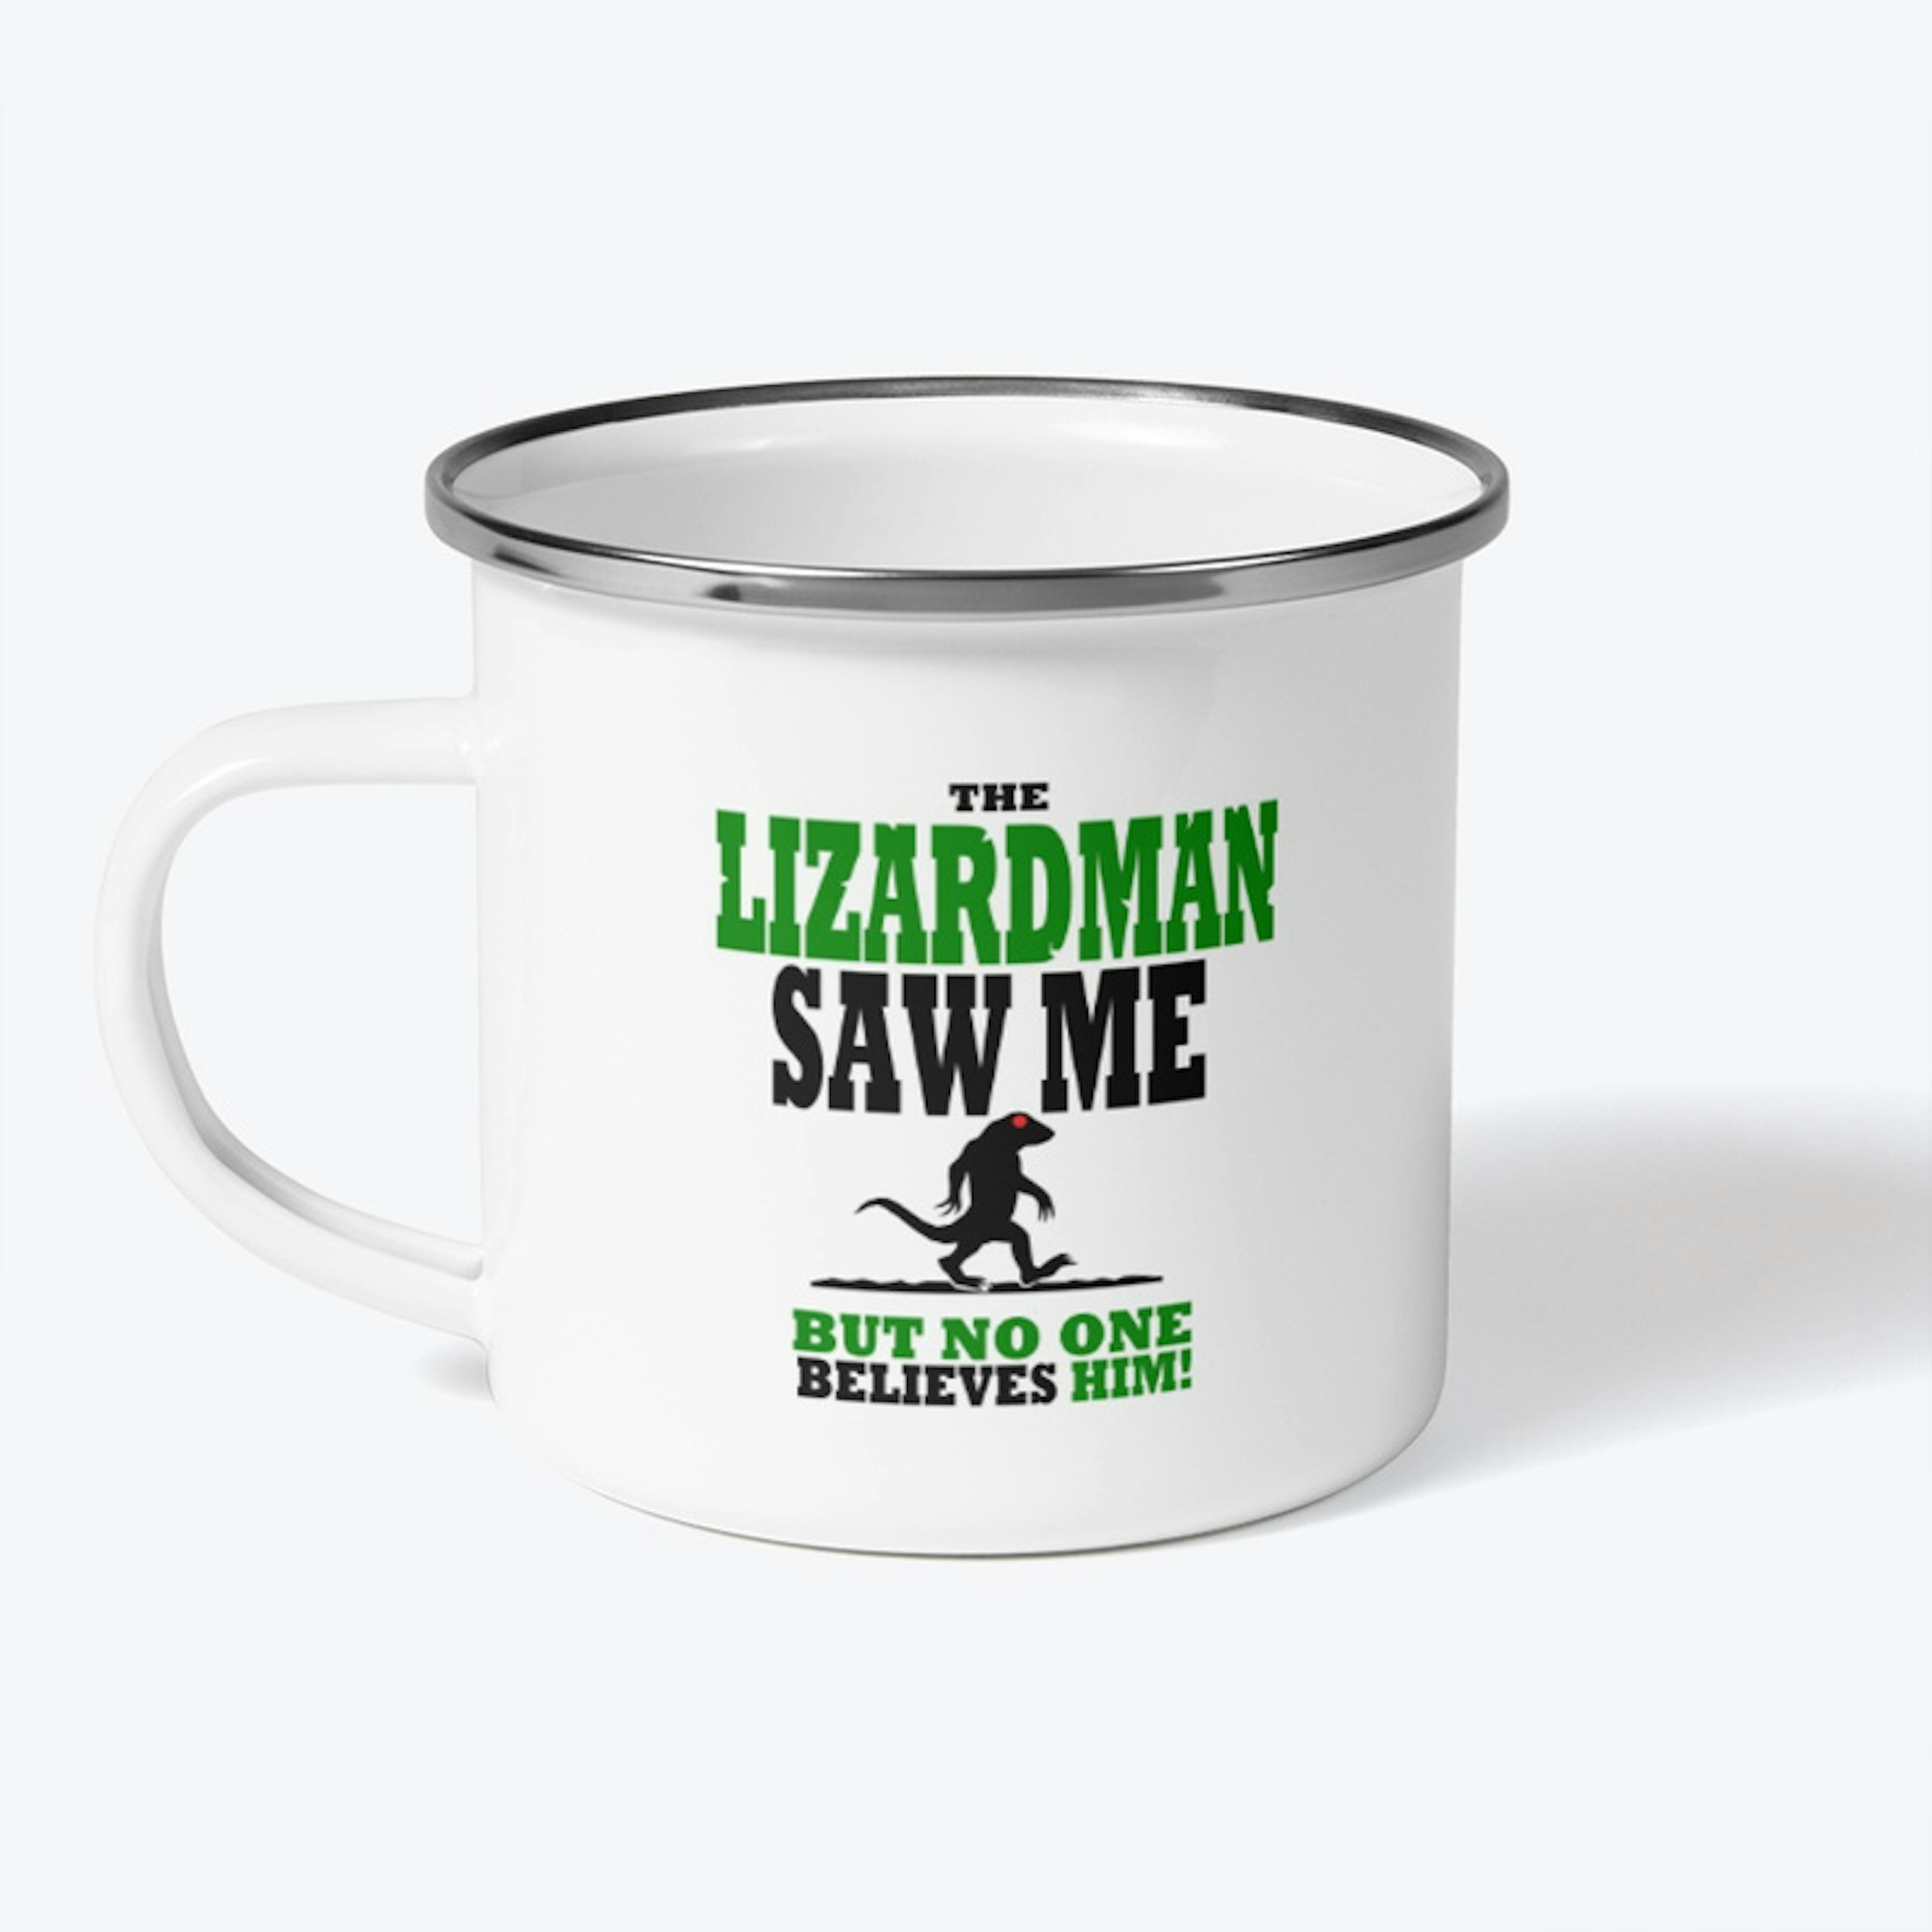 The LIZARDMAN SAW ME camping mug